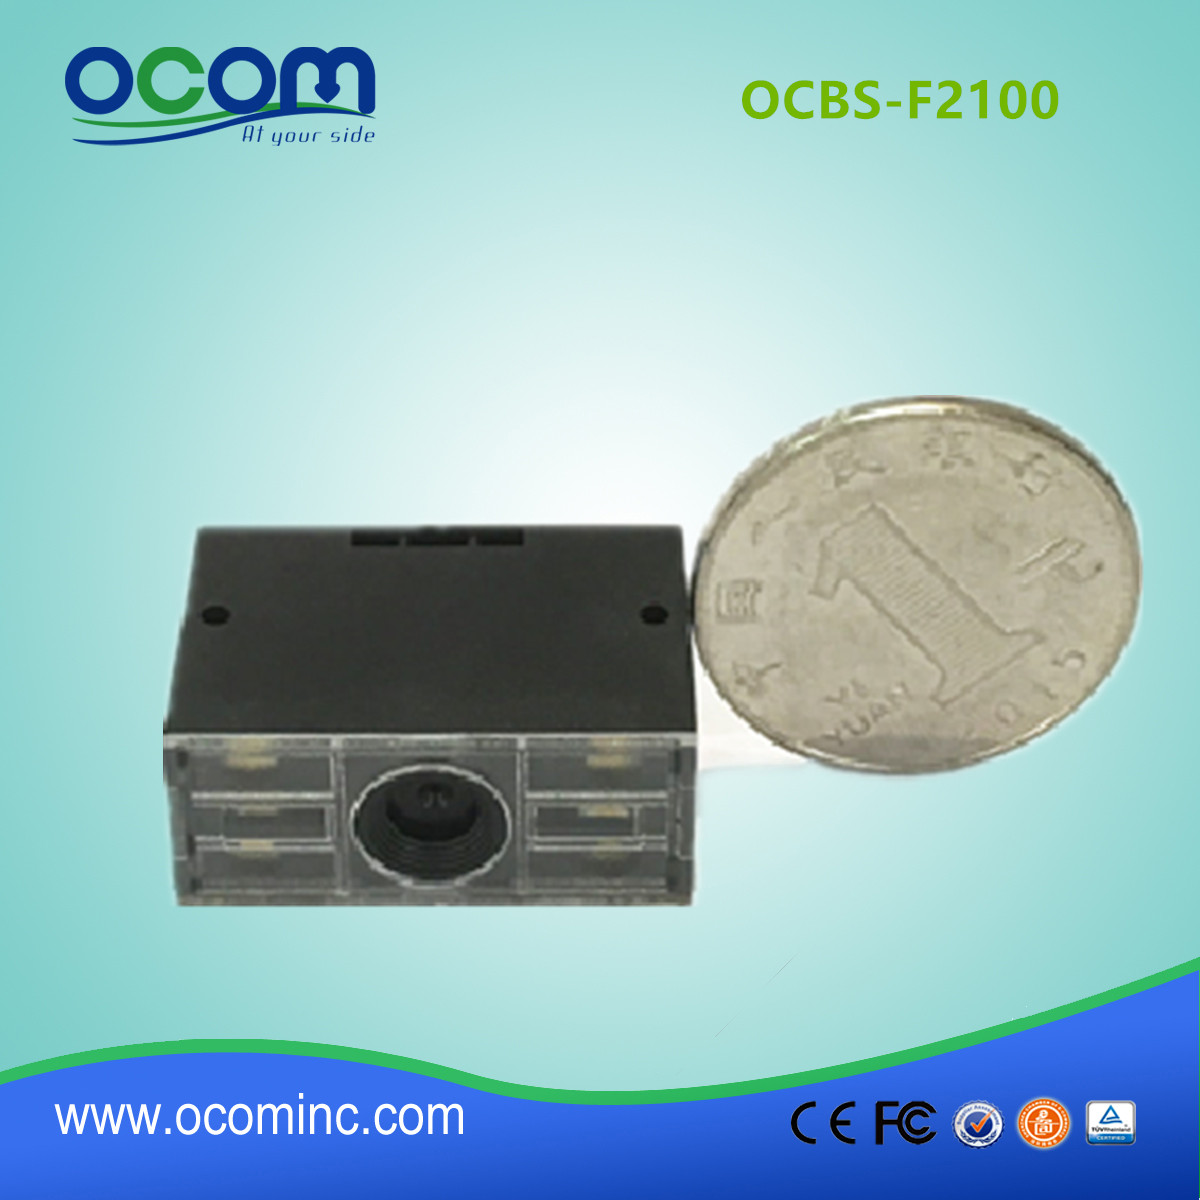 (OCBS-F2100) Σταθερή μονάδα σαρωτή γραμμωτού κώδικα 1D / 2D